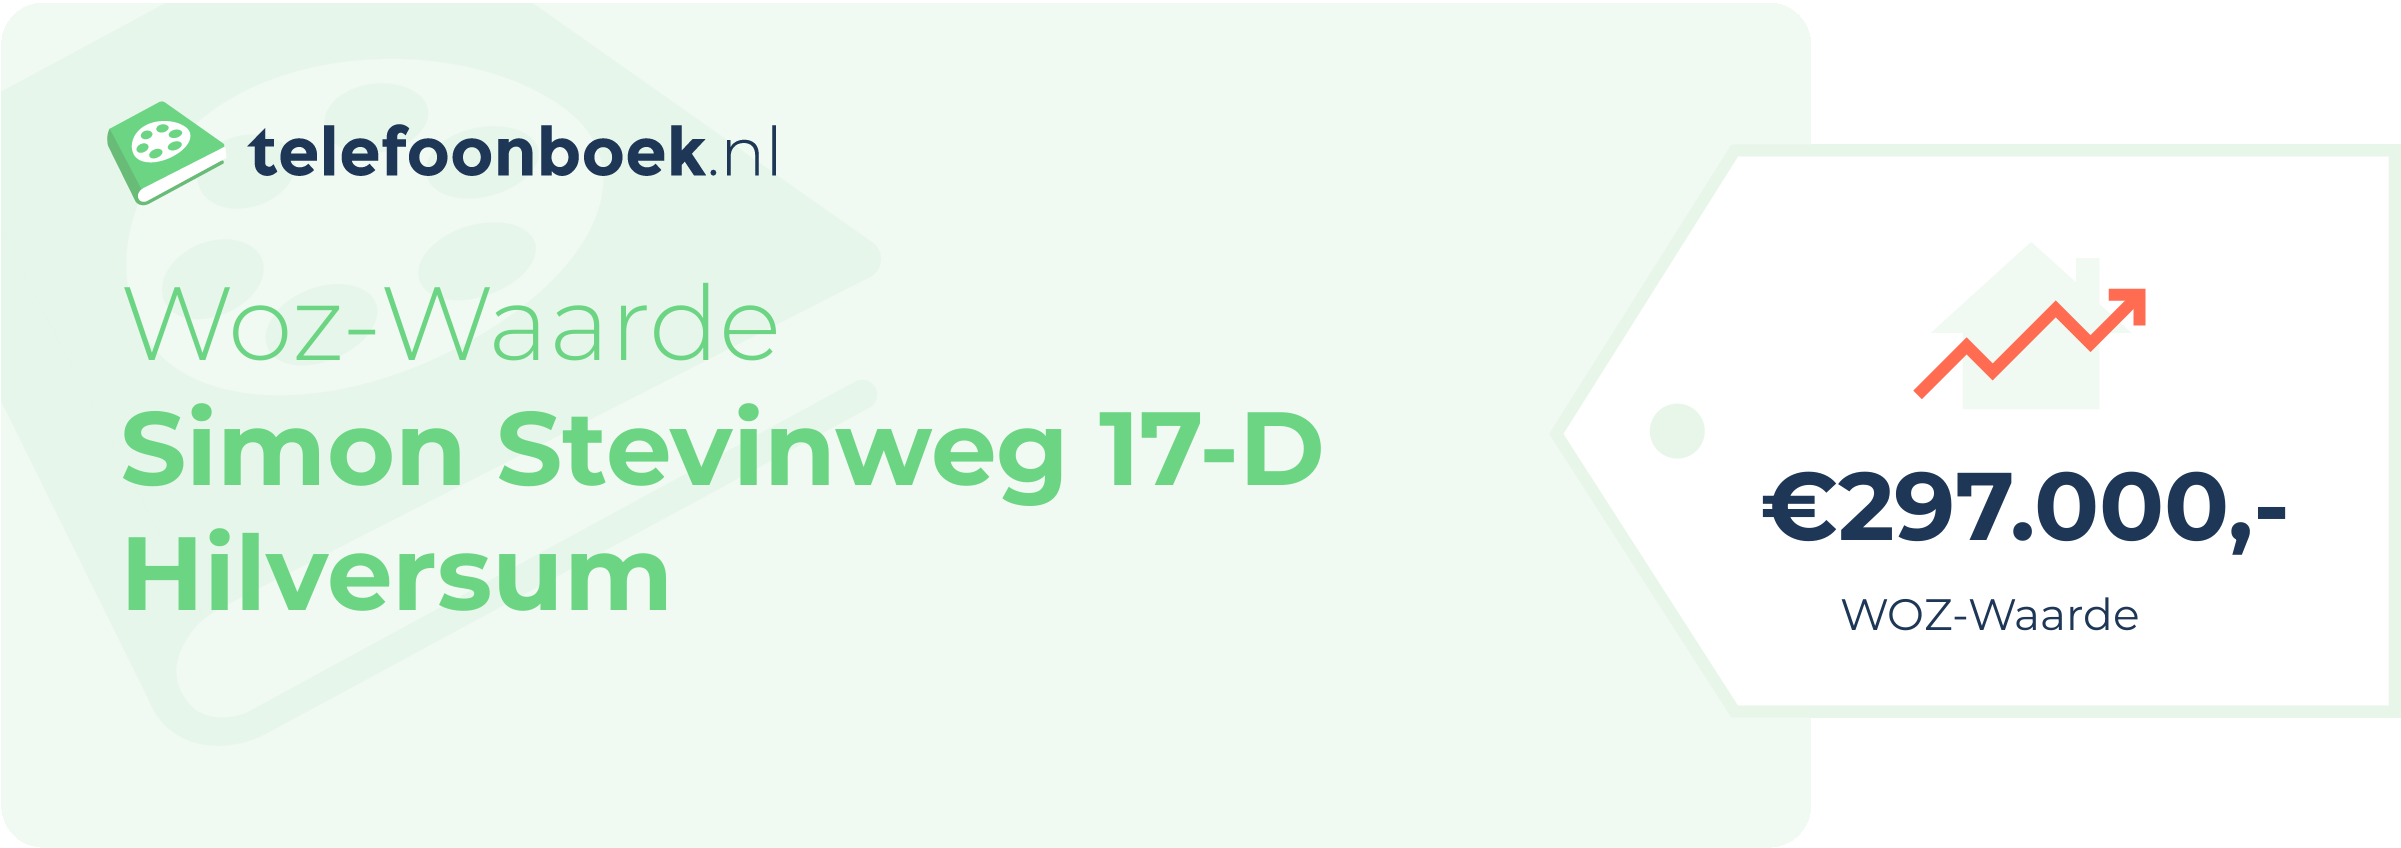 WOZ-waarde Simon Stevinweg 17-D Hilversum